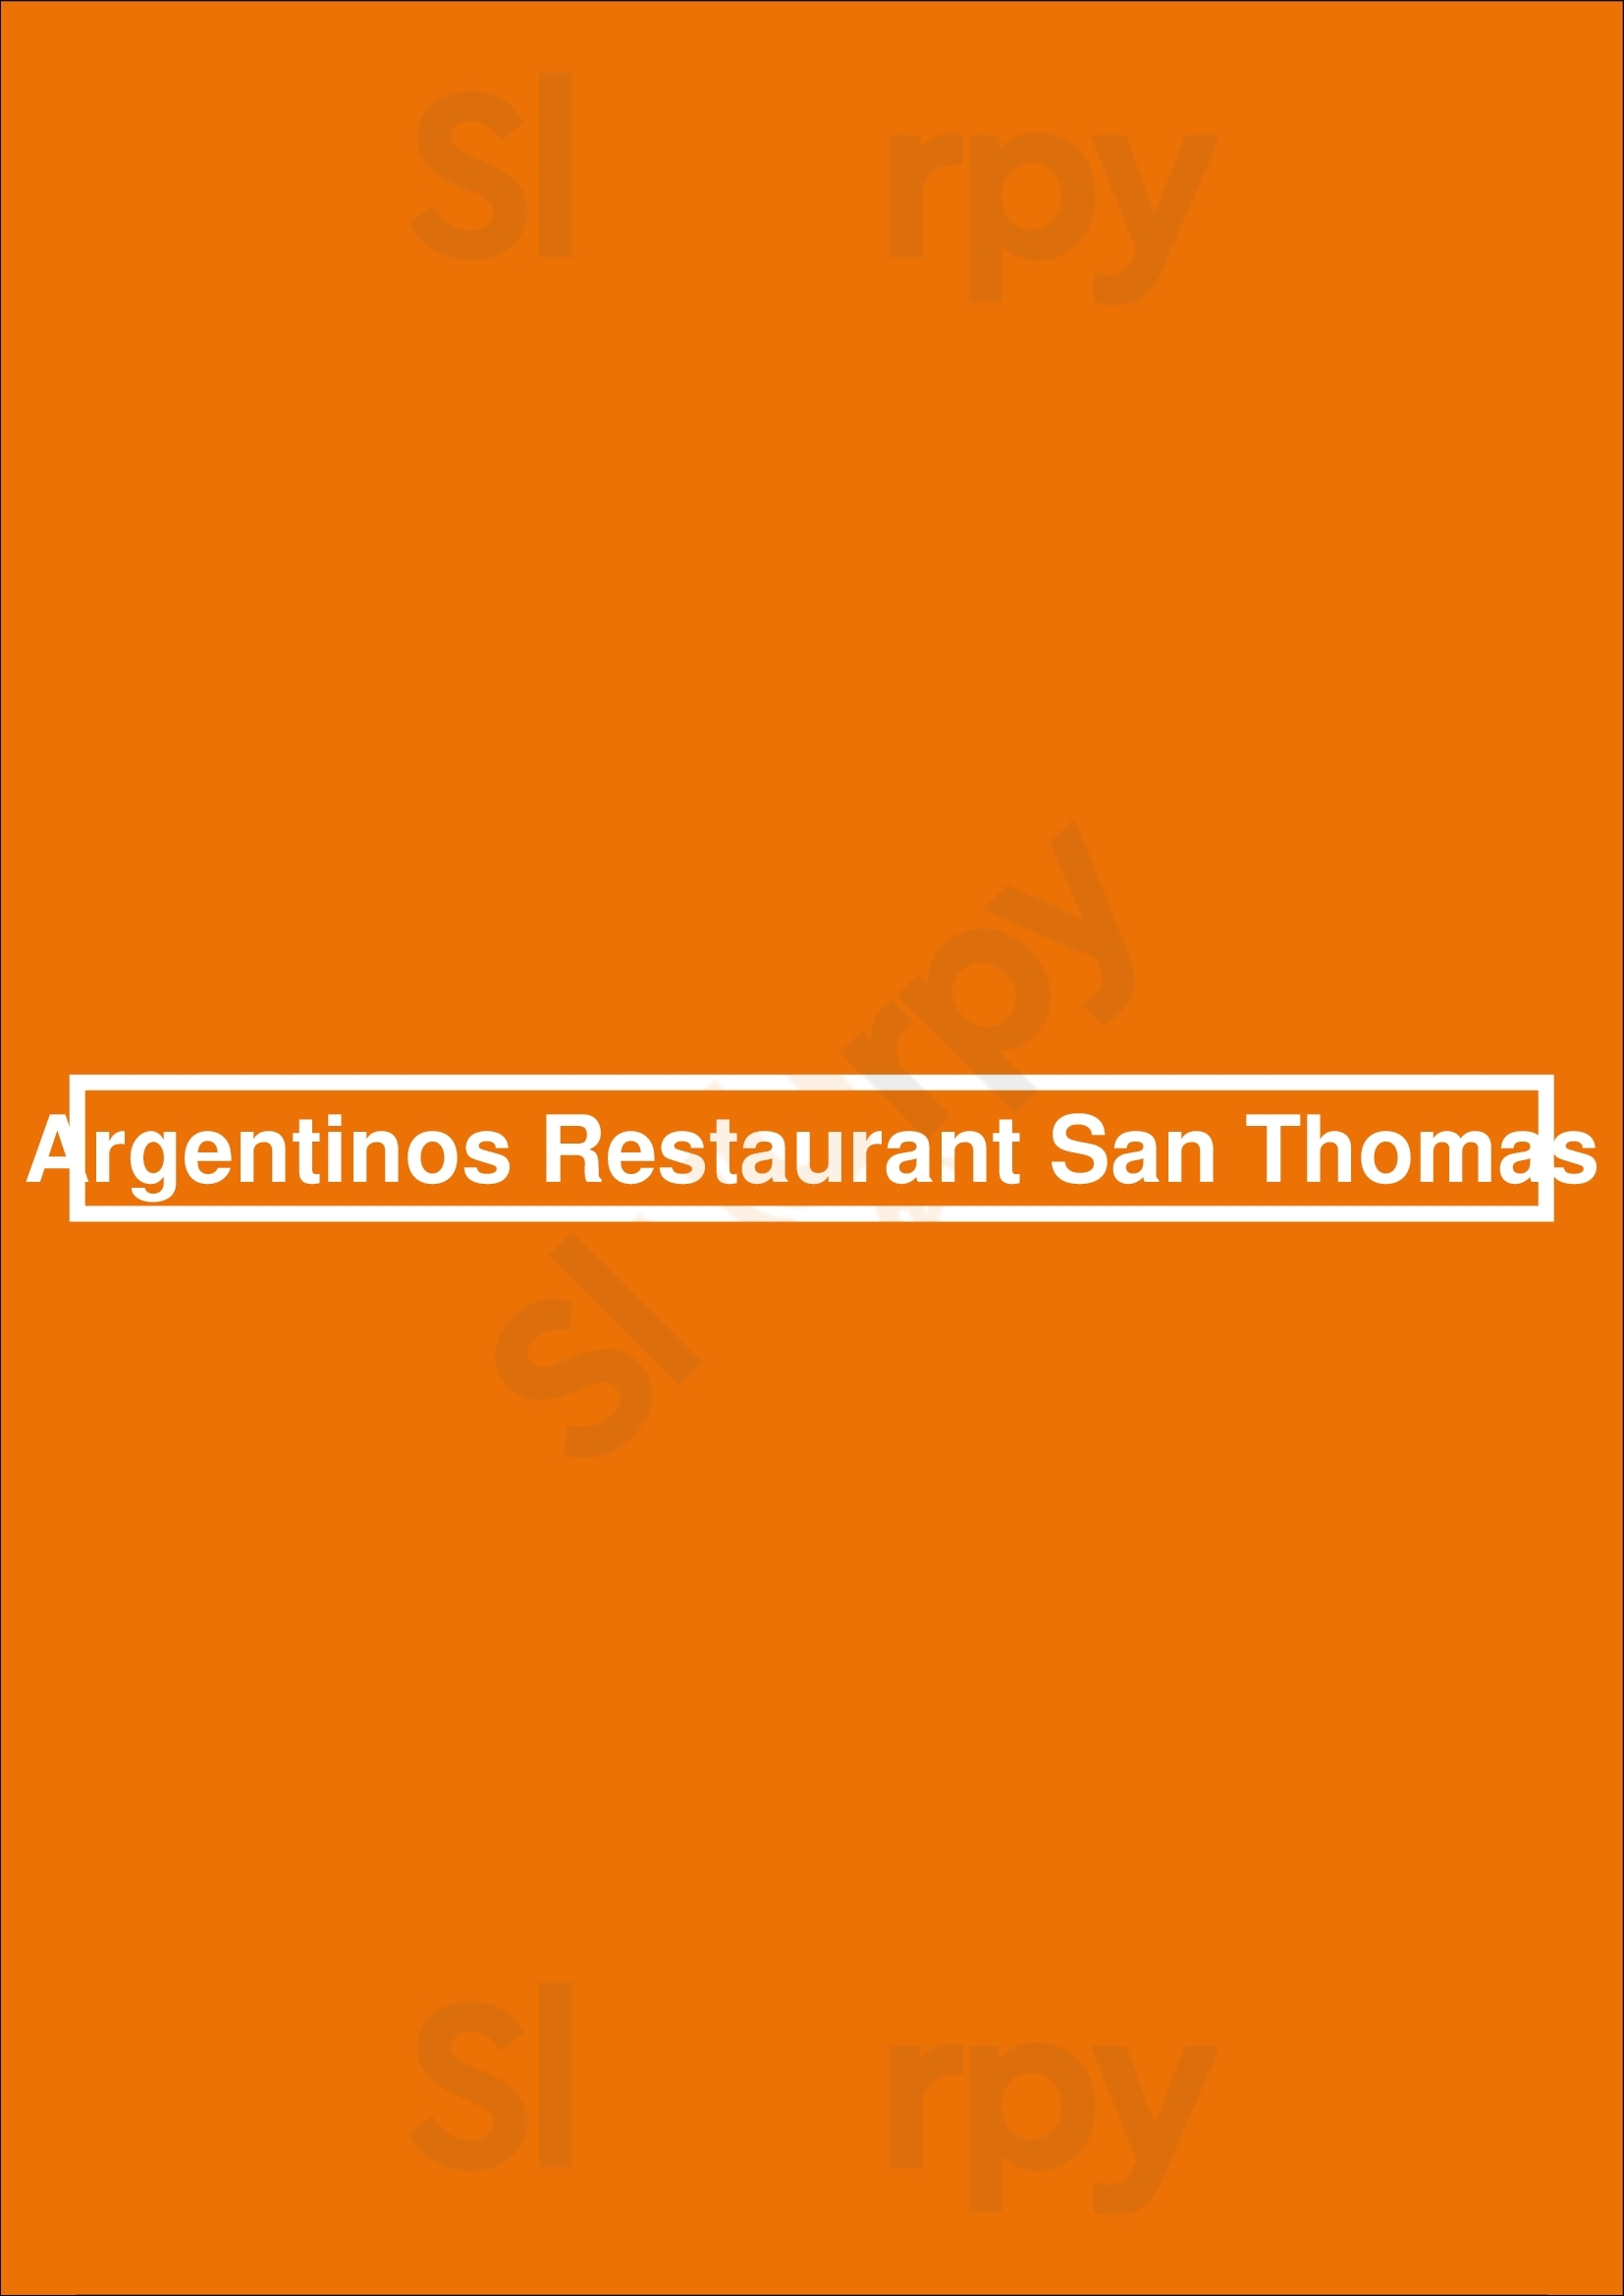 Argentinos Restaurant San Thomas Amsterdam Menu - 1